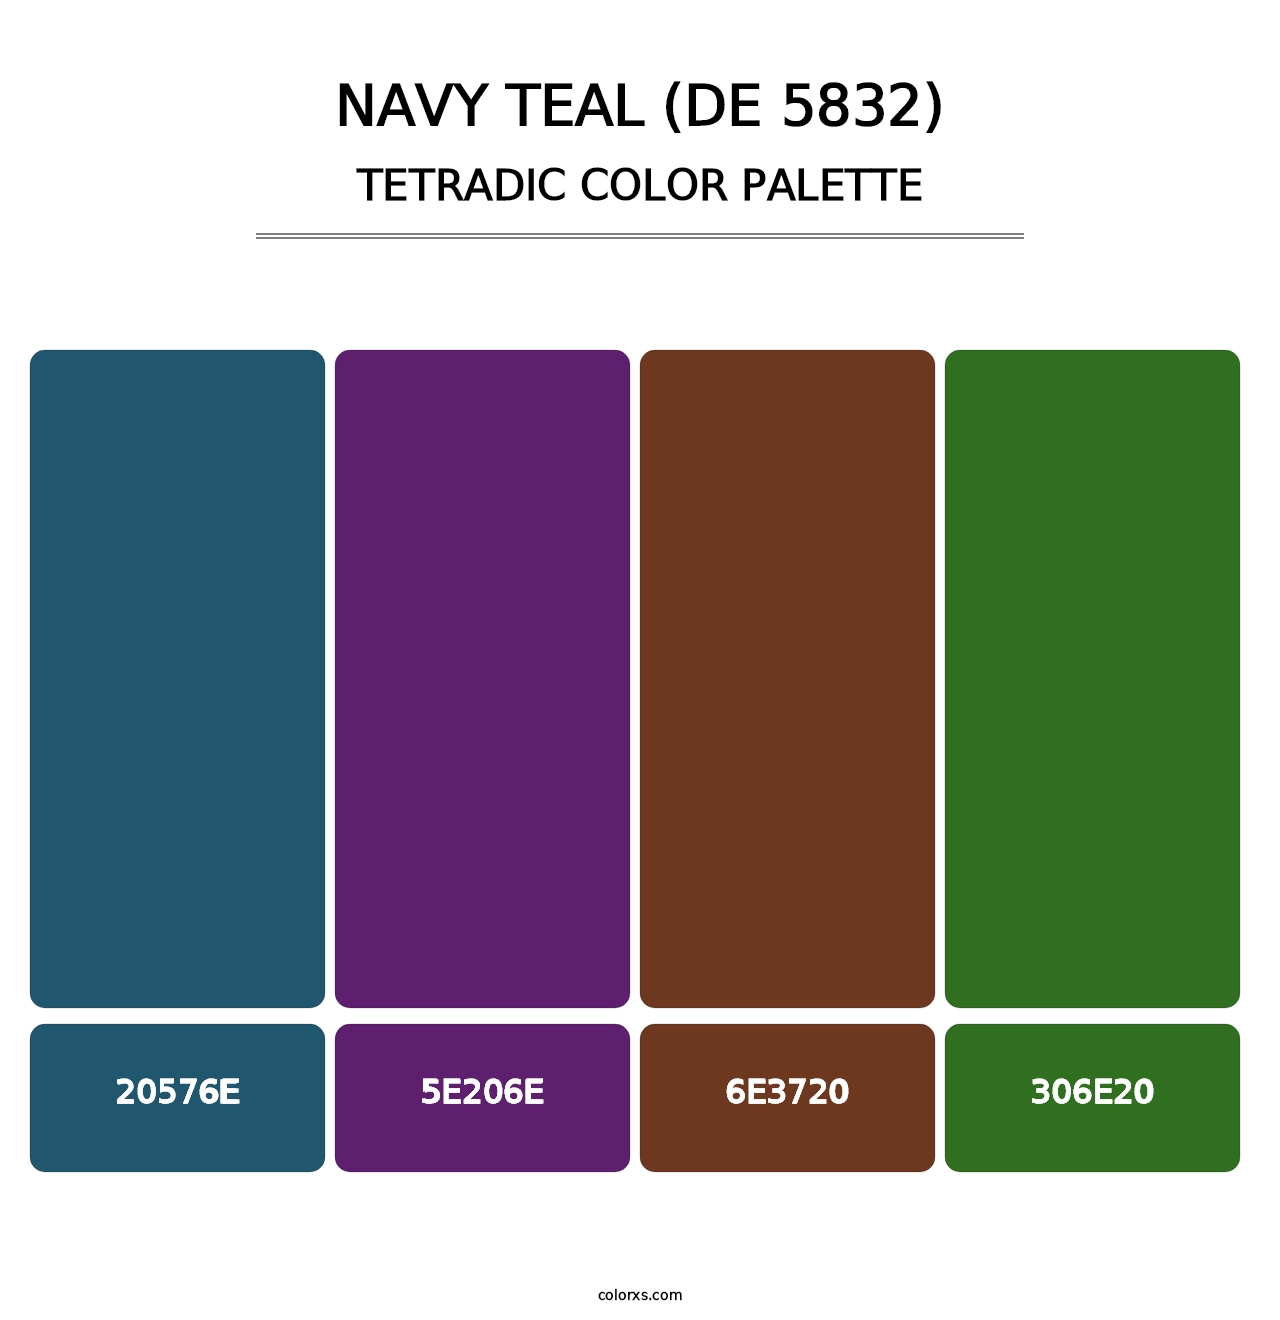 Navy Teal (DE 5832) - Tetradic Color Palette